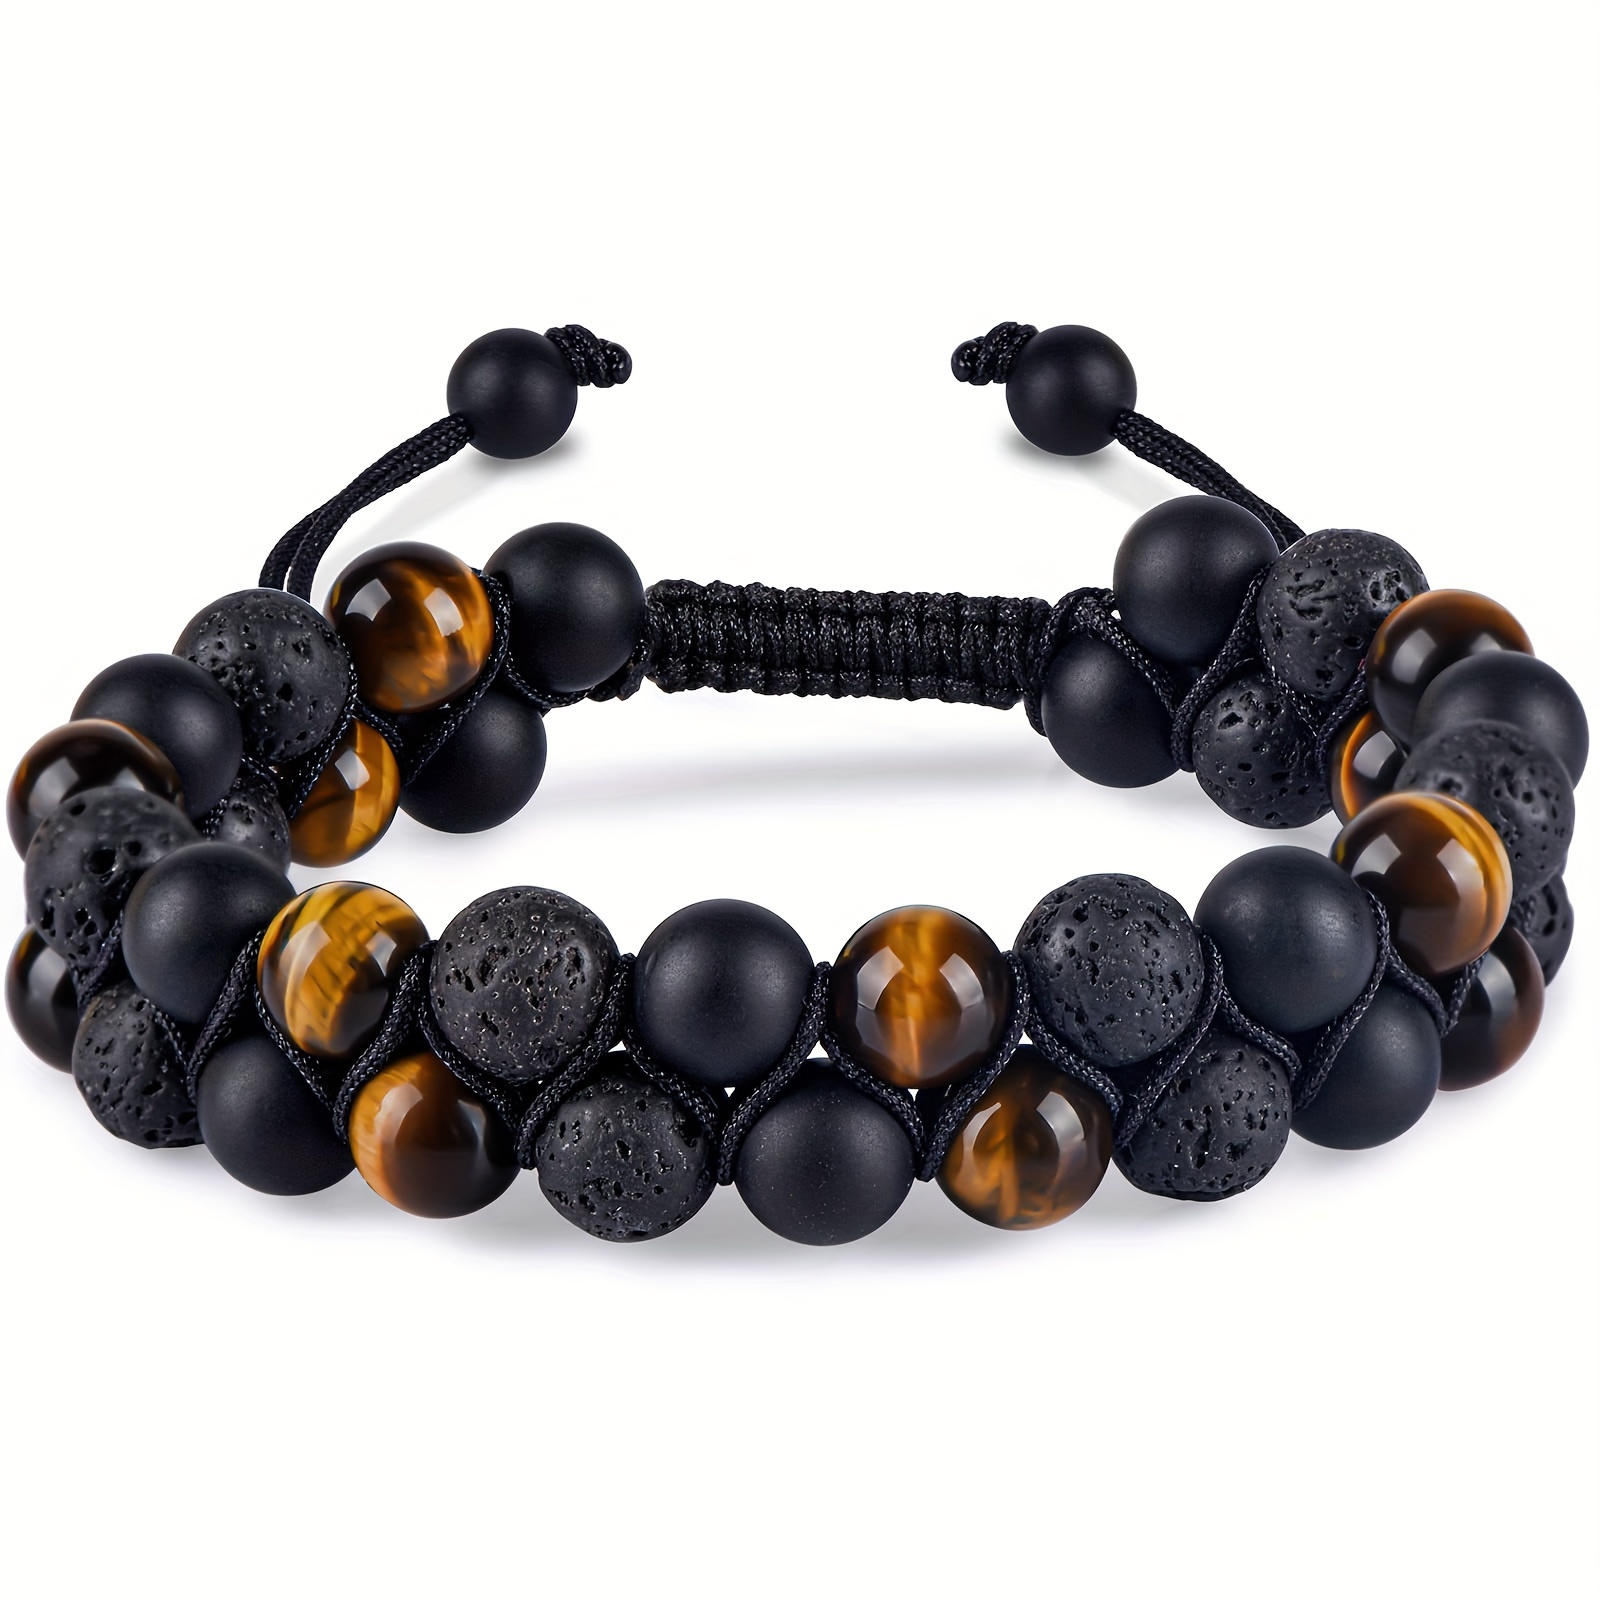 

Triple Protection Bracelet, Handmade Tigers Eye Black Obsidian & Hematite 8mm Beads Bracelet For Men Women, Bring Luck And Happiness